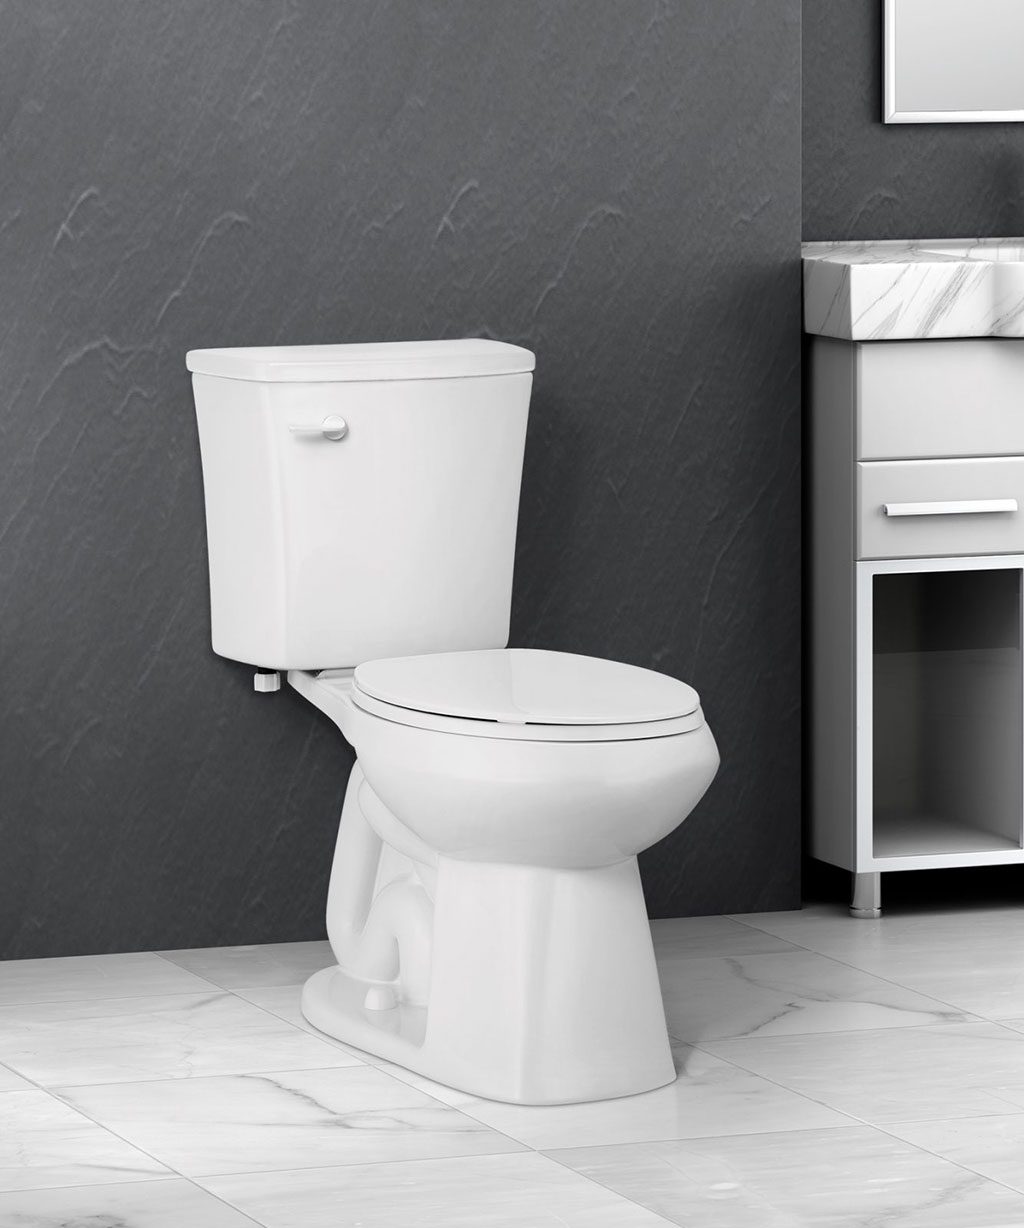 Toilet seat, Plumbing fixture, Interior design, Cabinetry, White, Black, Rectangle, Wood, Purple